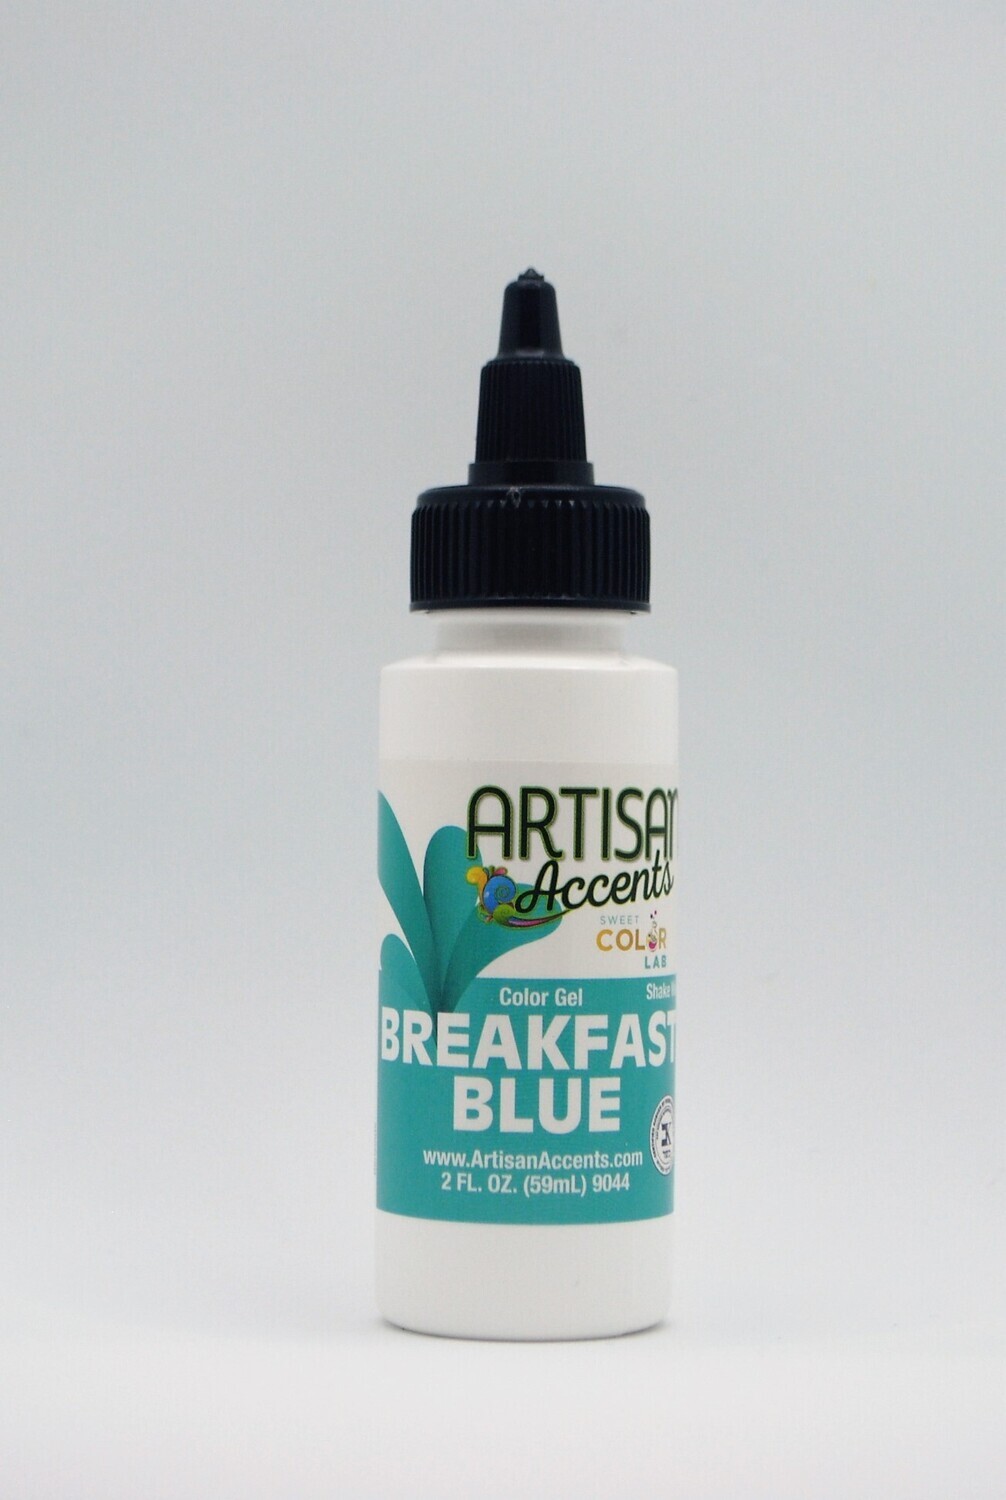 Artisan Accent Breakfast Blue